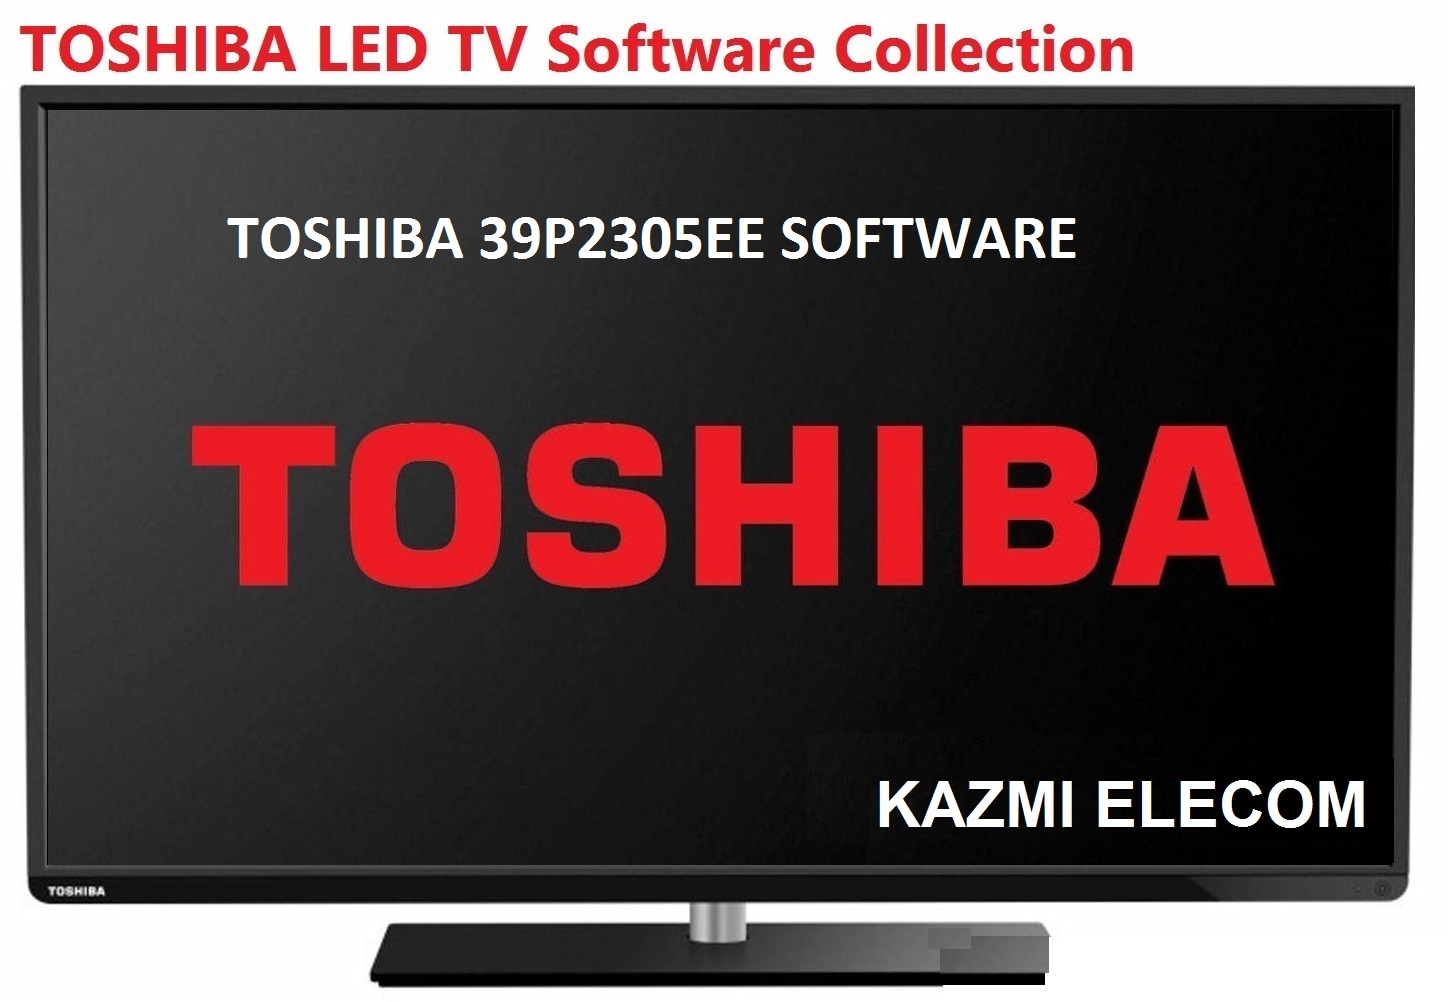 Toshiba 39P2305Ee